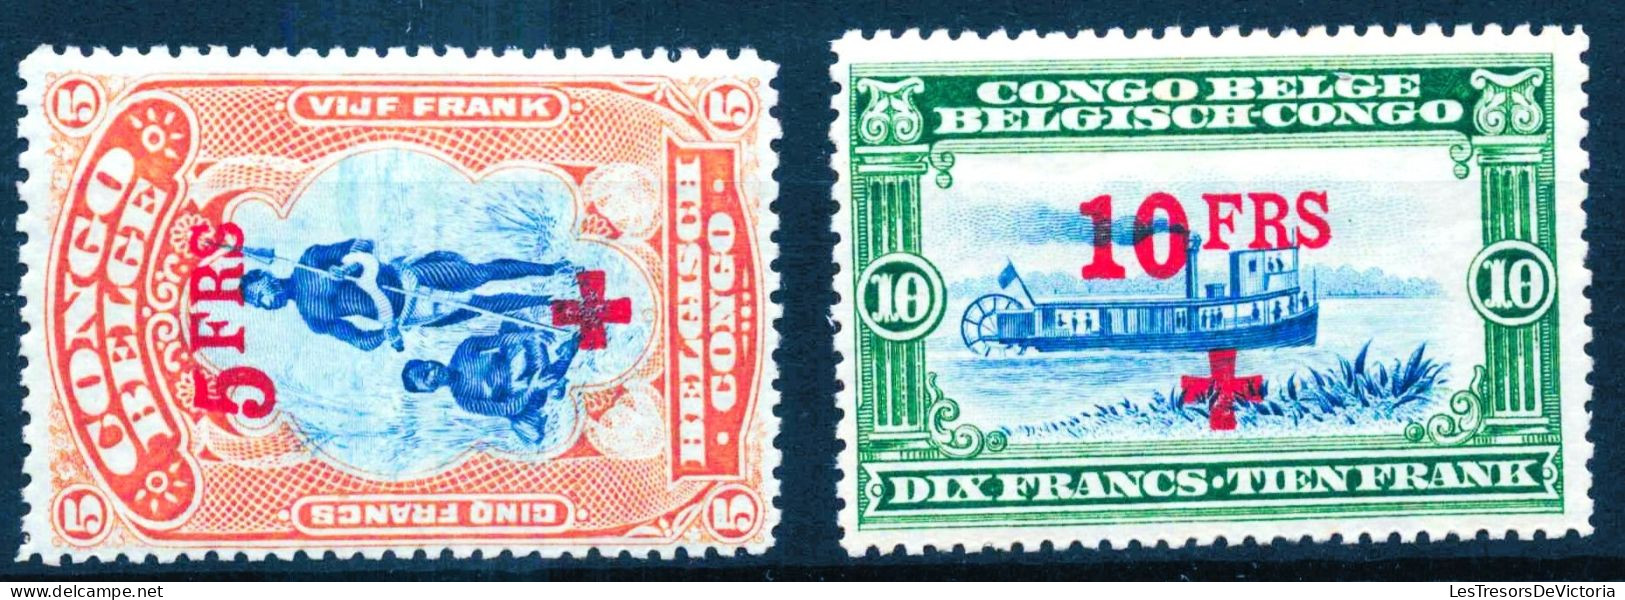 Timbres - Congo Belge - 1918 - COB 72/80* - Cote 275 - Unused Stamps